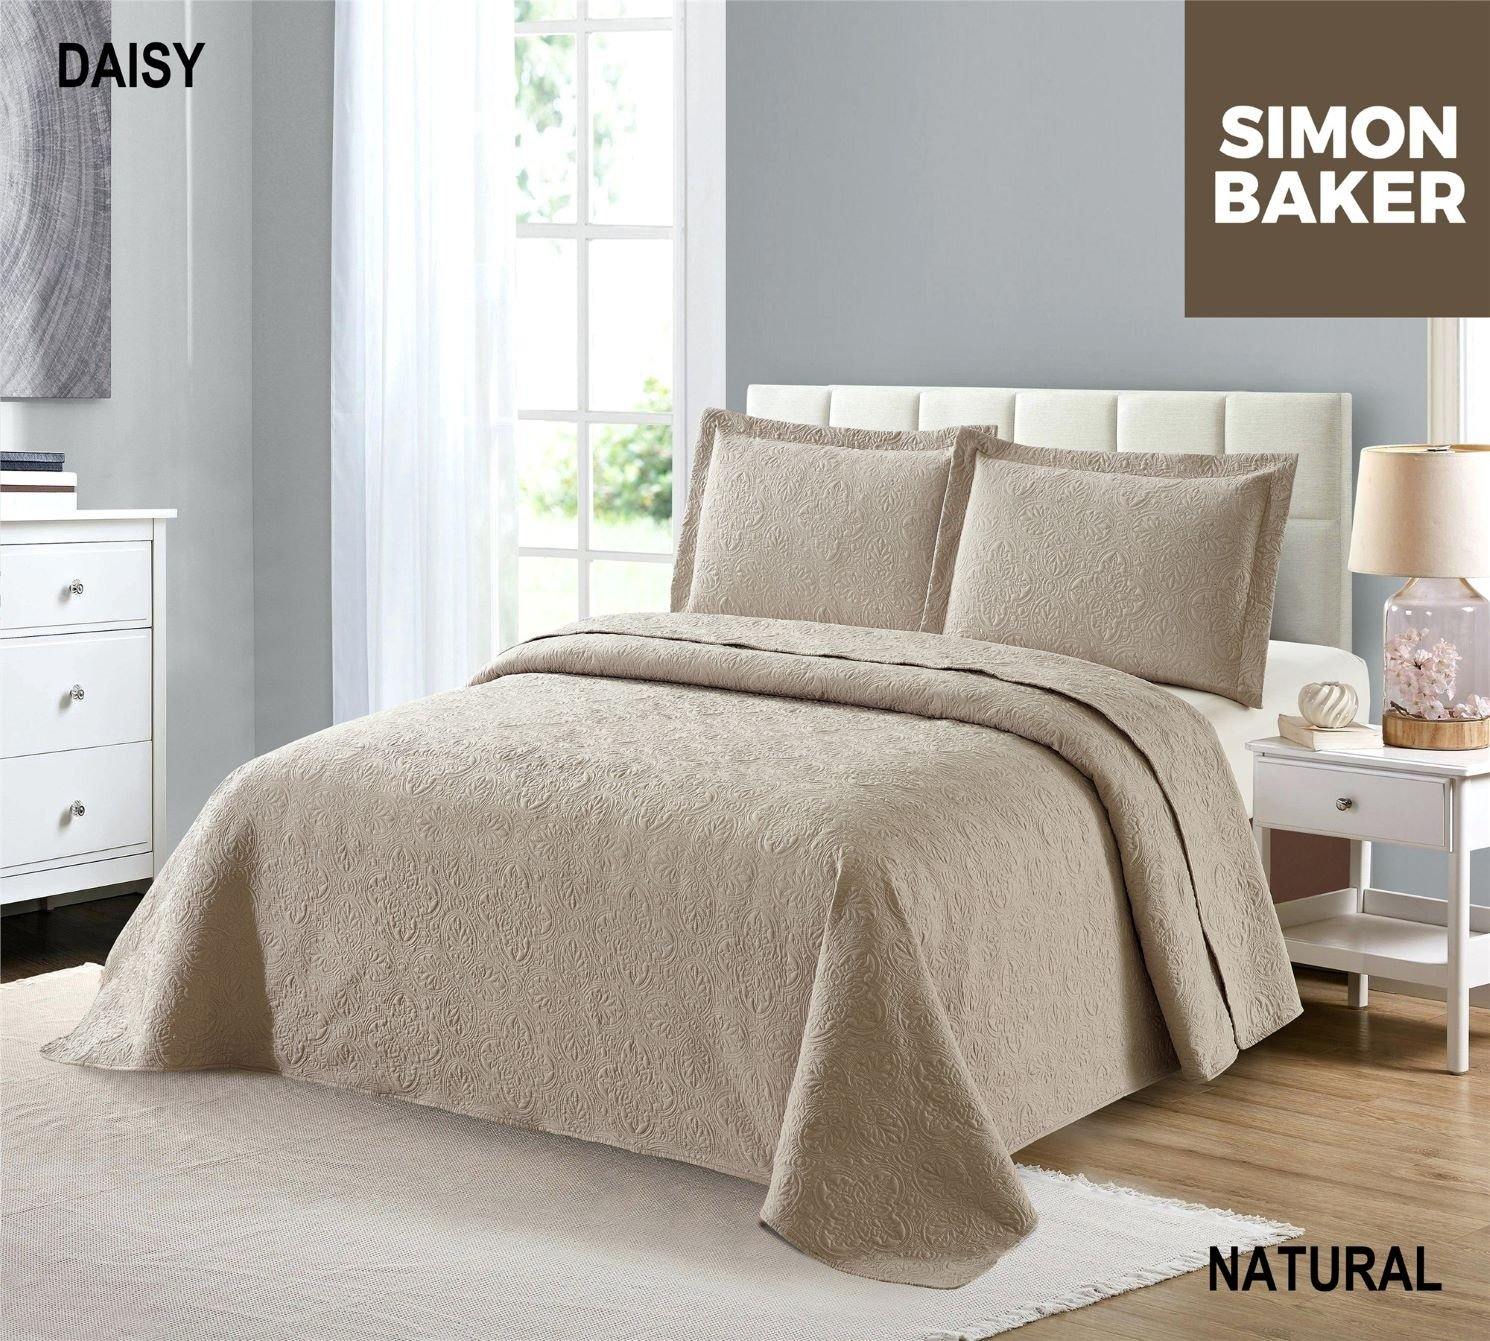 Simon Baker | Daisy Bedspread Natural (Various Sizes)